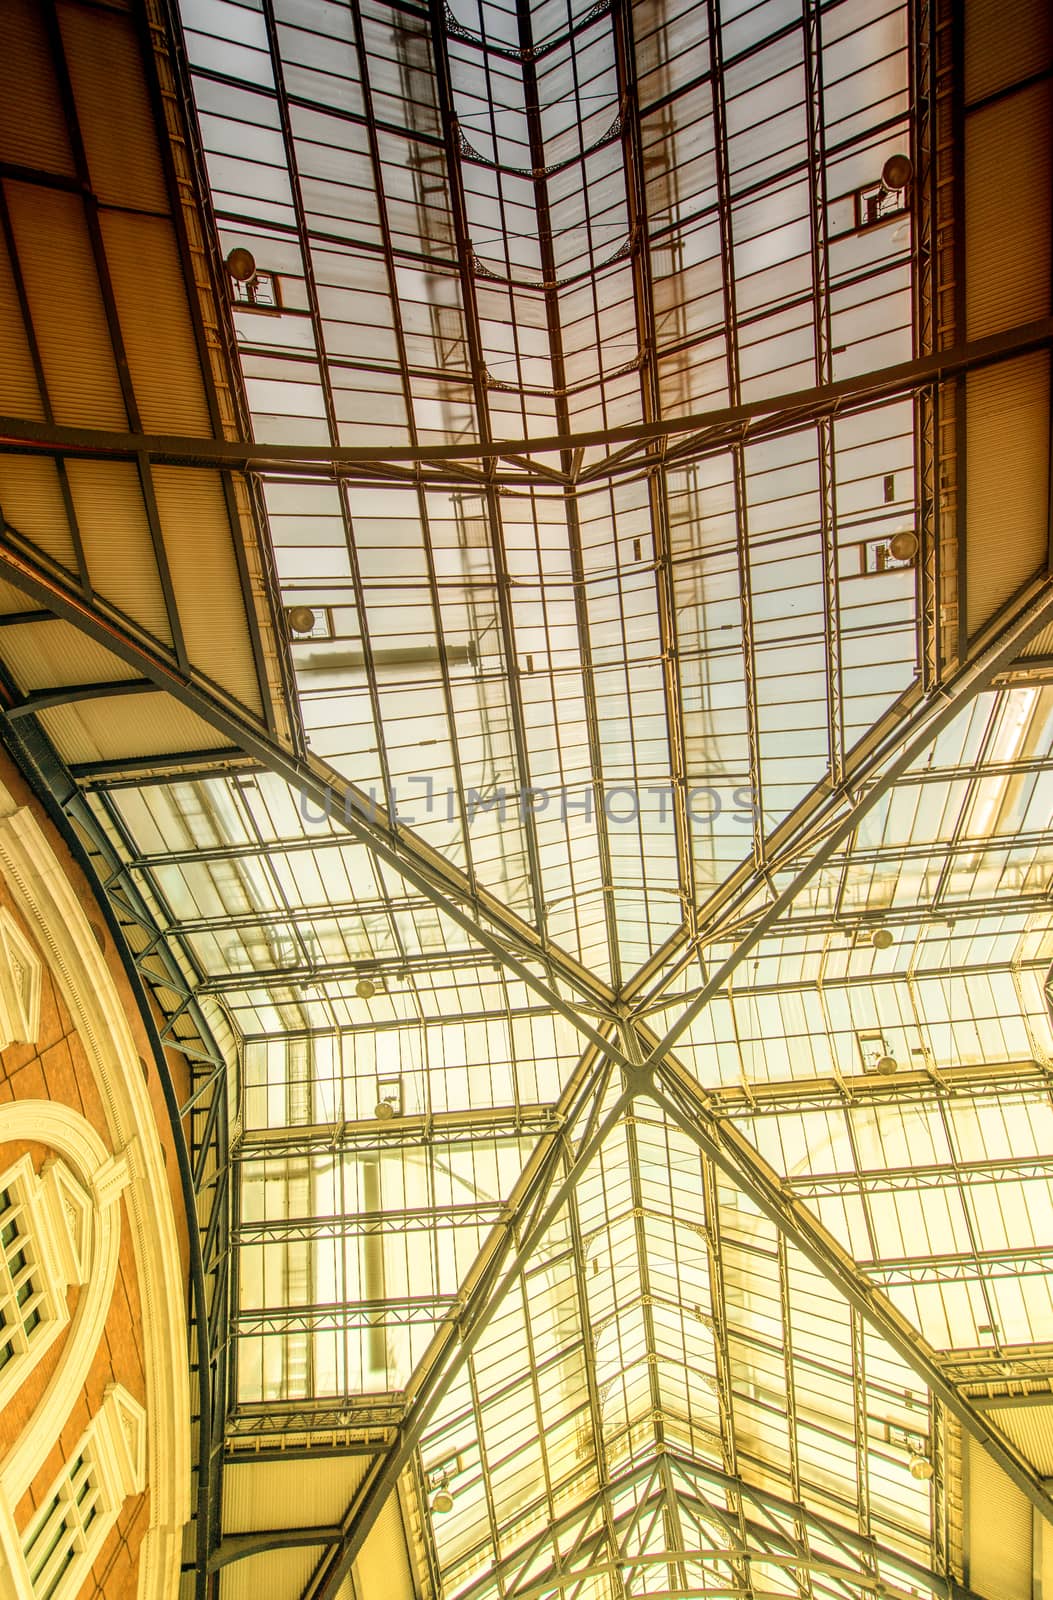 LONDON - SEPTEMBER 27, 2013: Liverpool Street station roof glass by jovannig